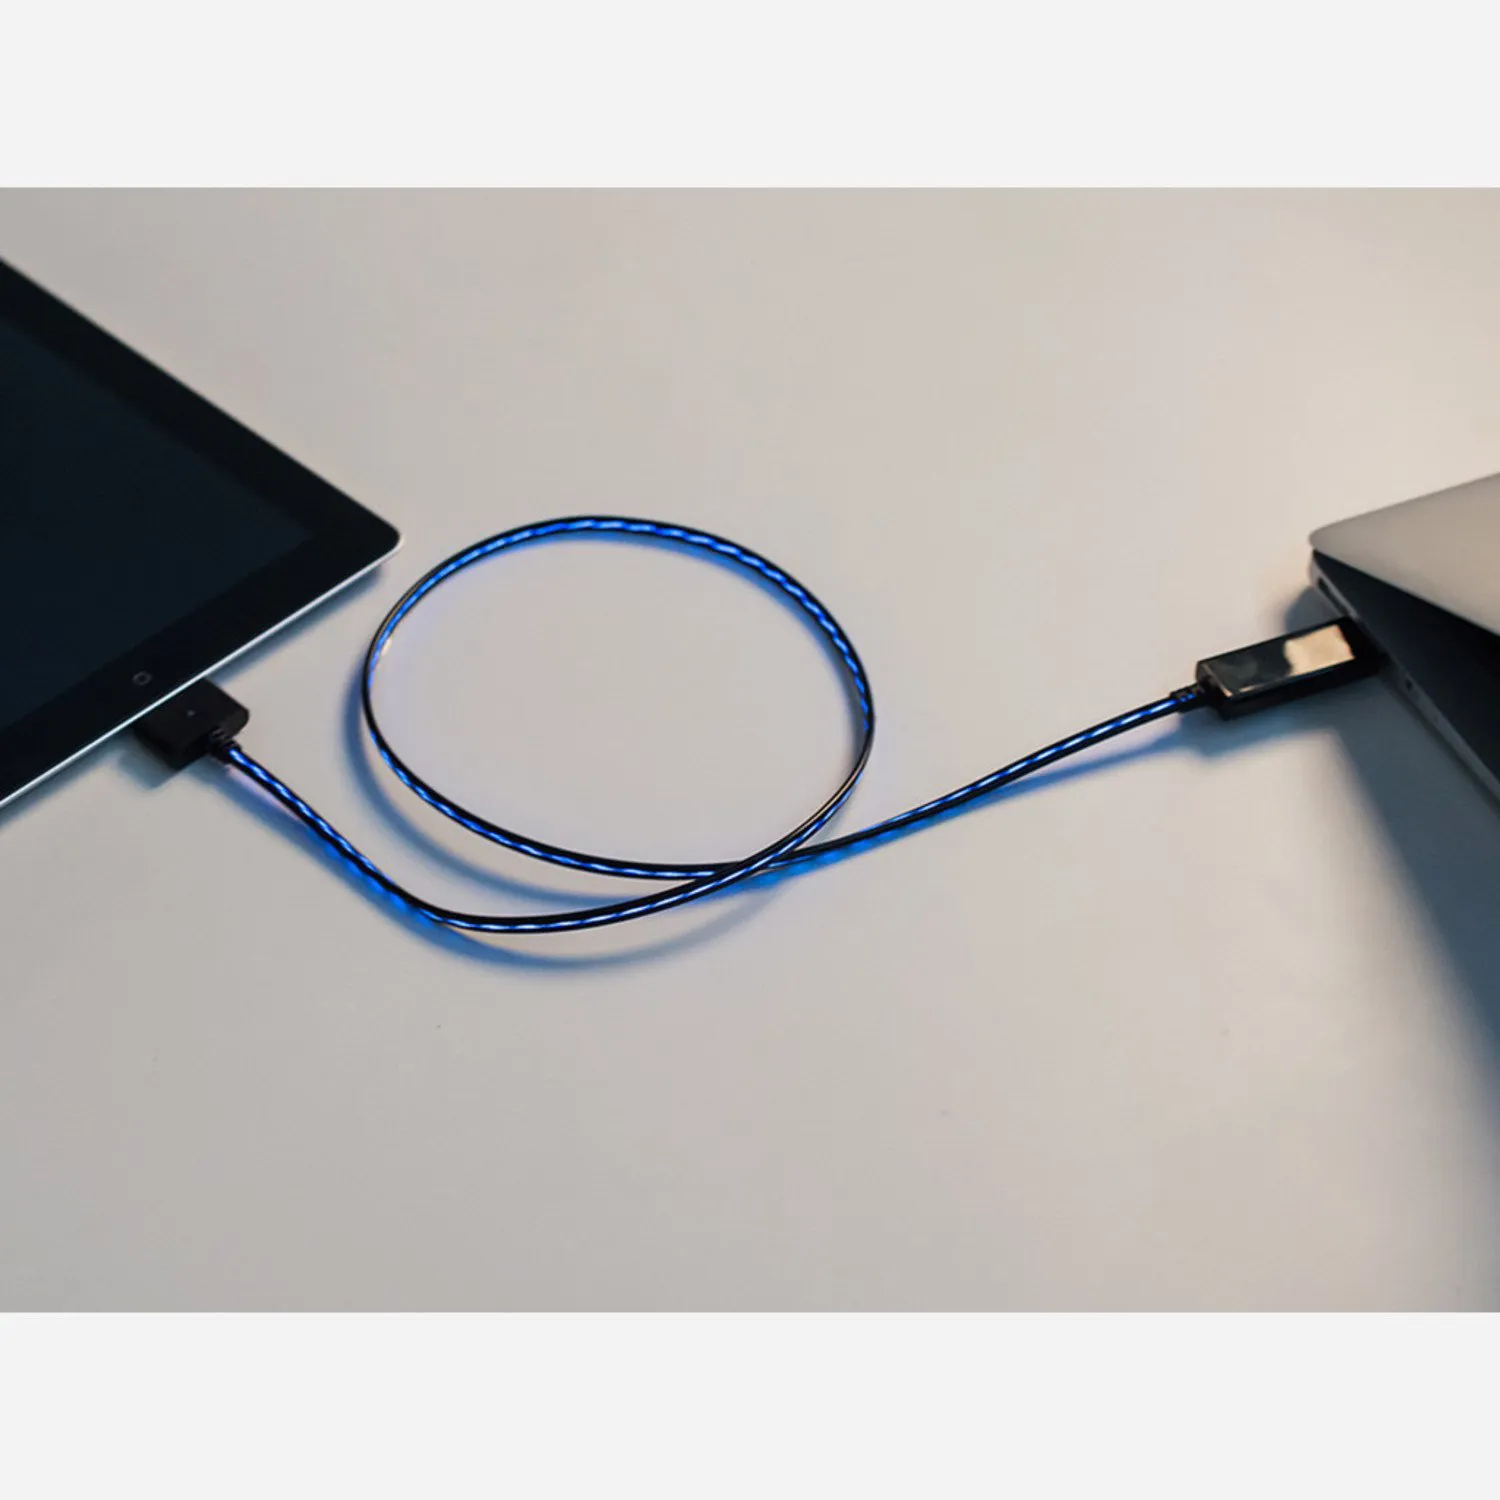 Photo of Flowing Effect iOS Dock Data+Charging Cable - Black w/Aqua EL